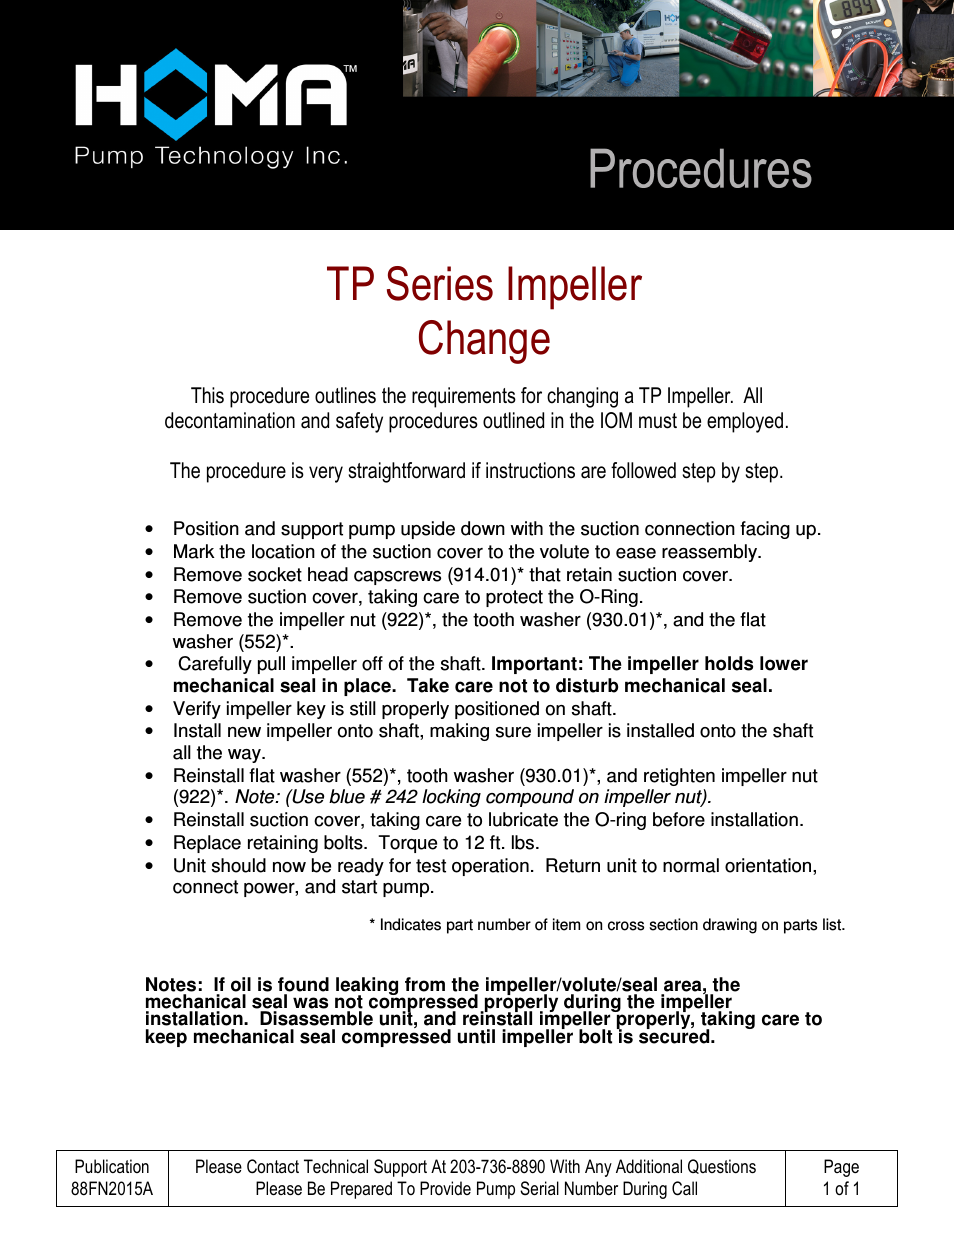 TP Series Impeller Change